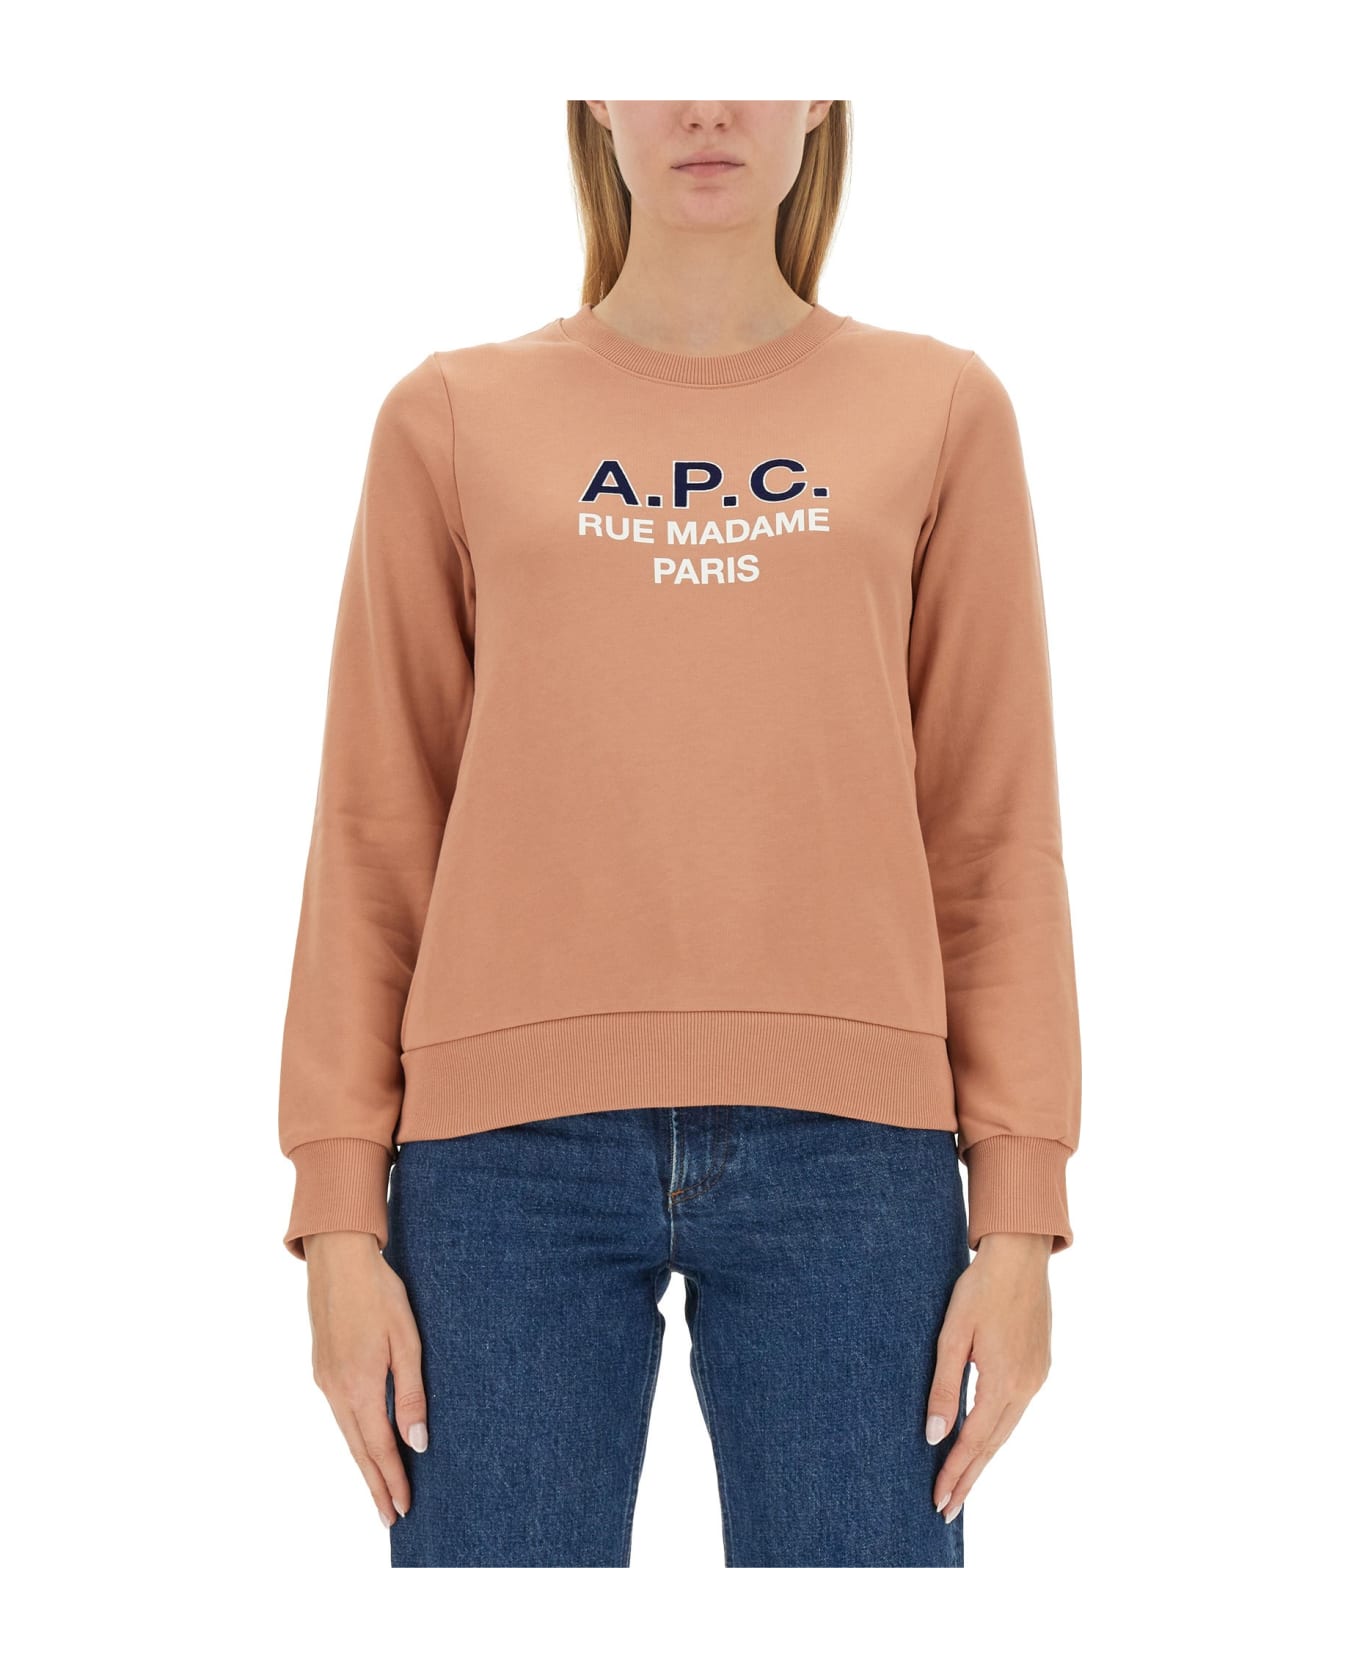 A.P.C. Madame Sweatshirt - Fad Rose Poudre フリース